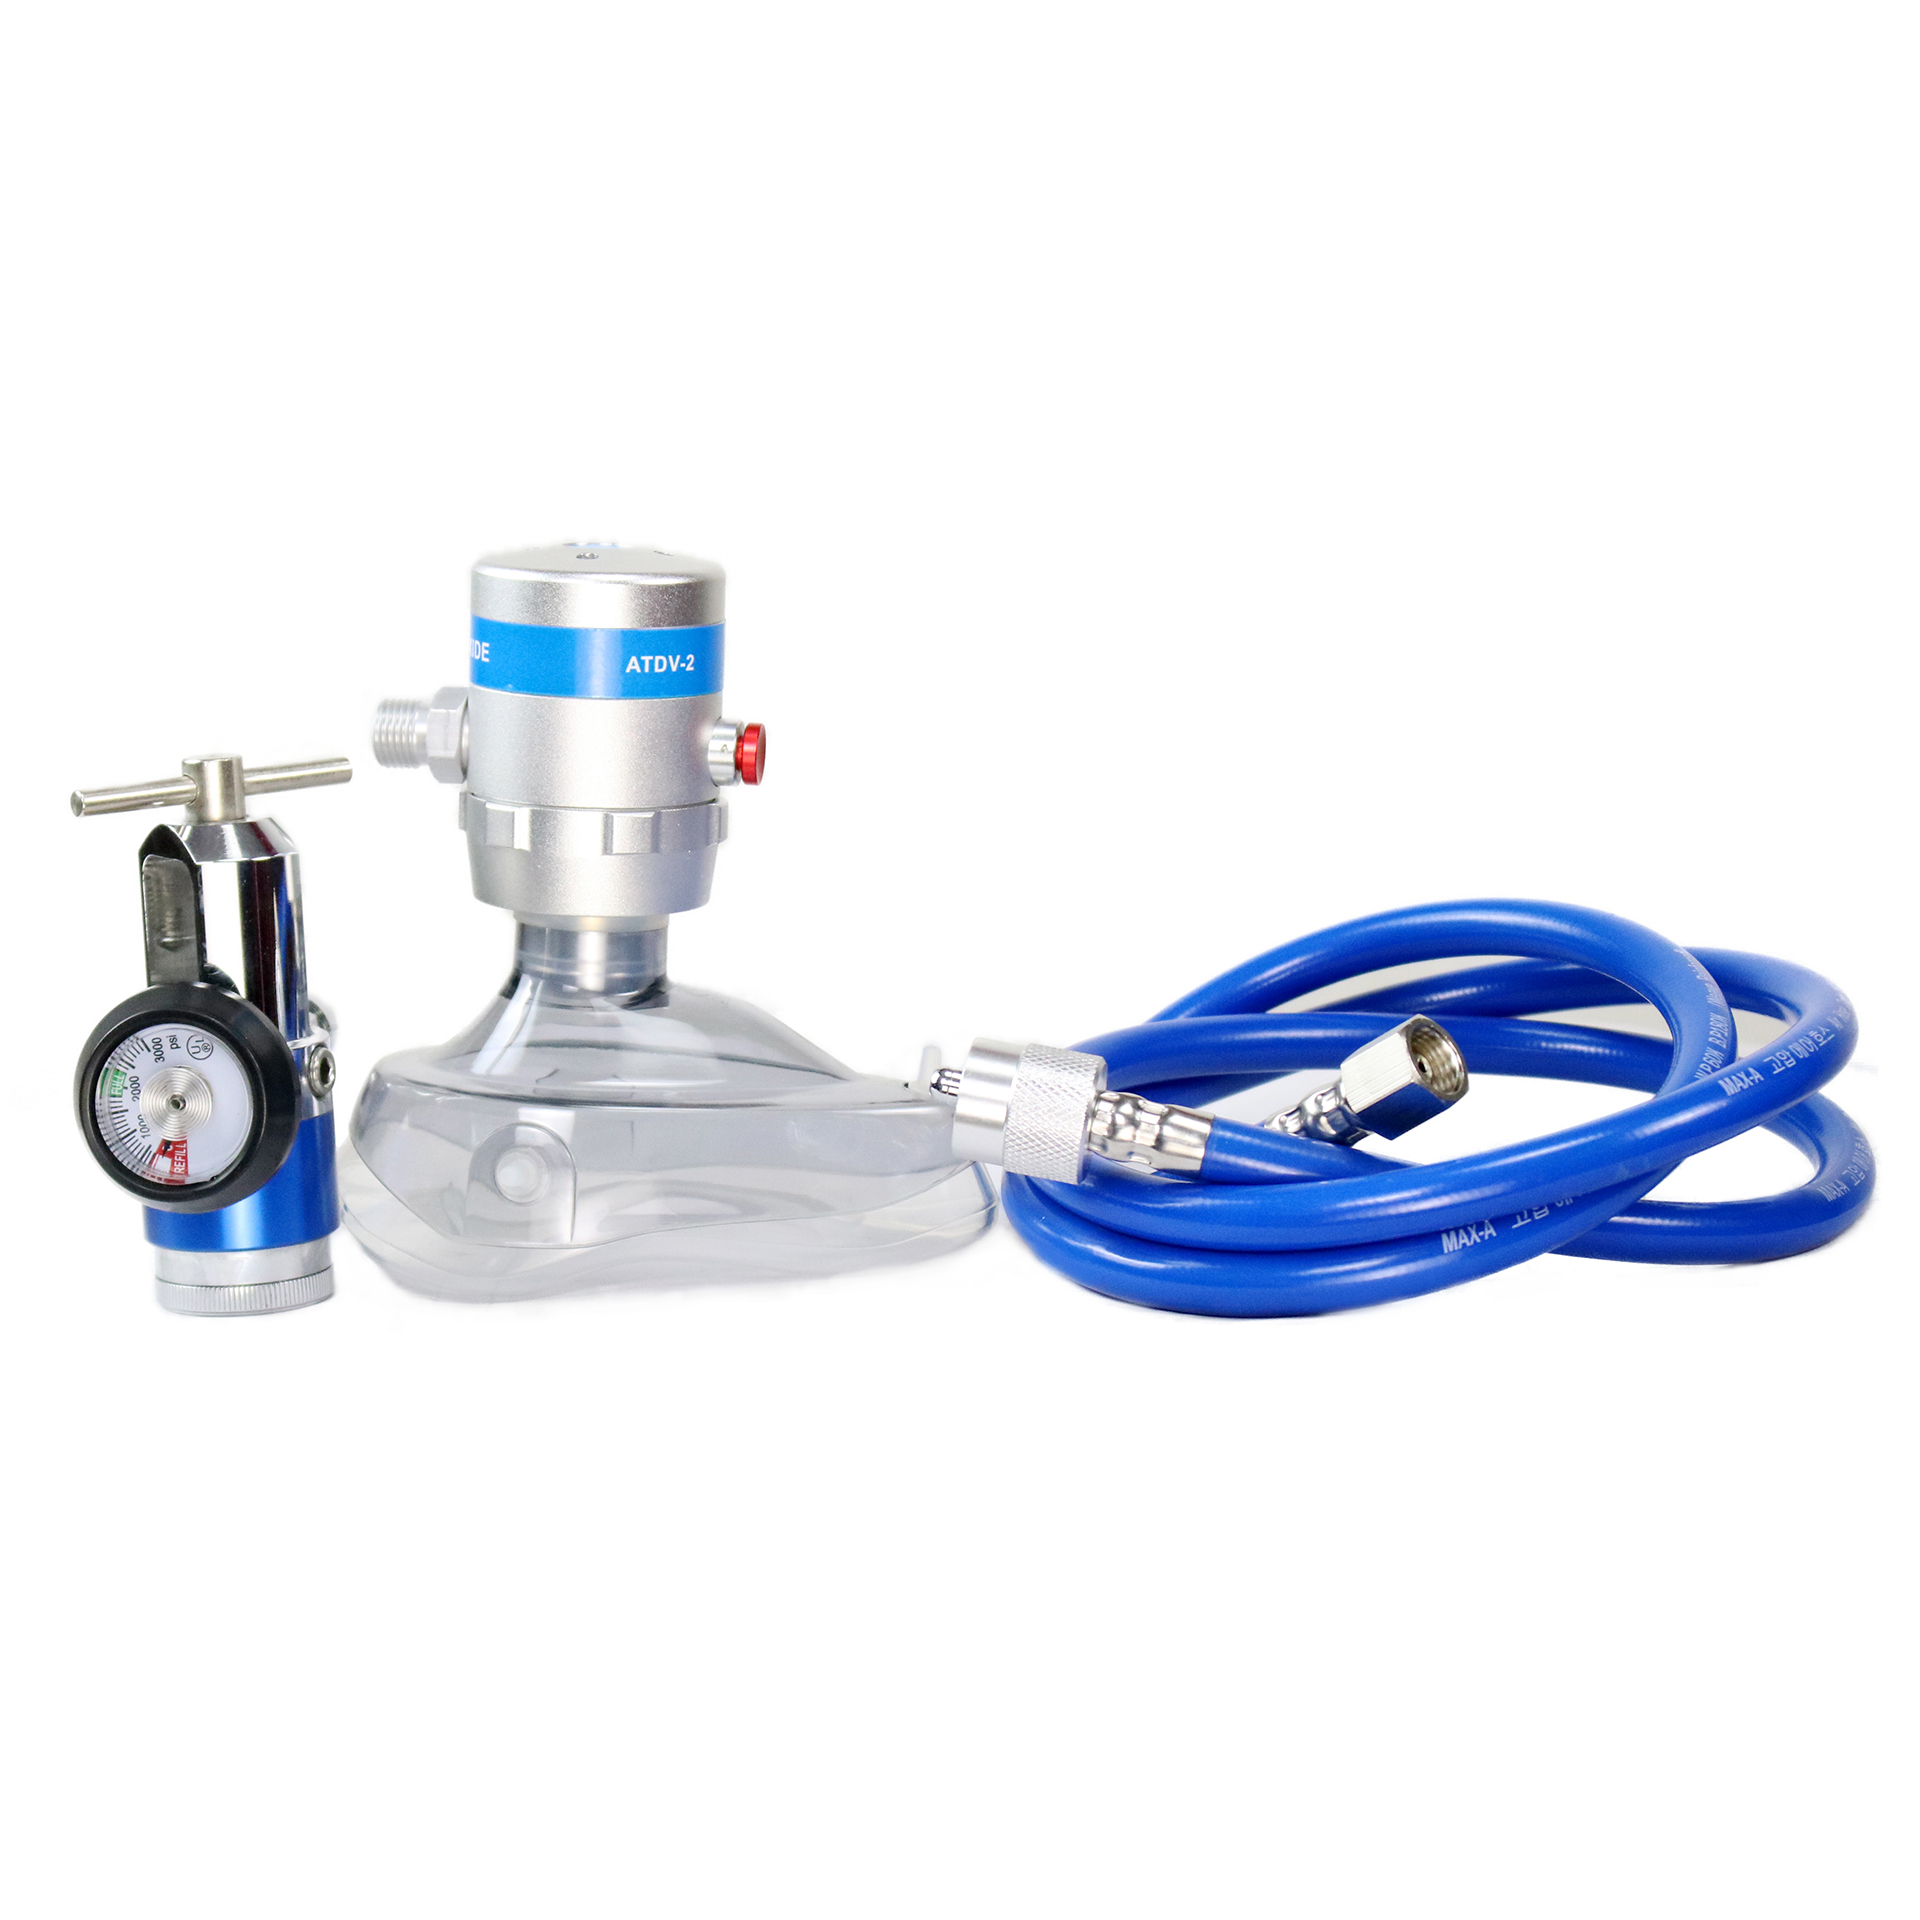 Entonox demand valve for medical mixed O2 and N2O gas